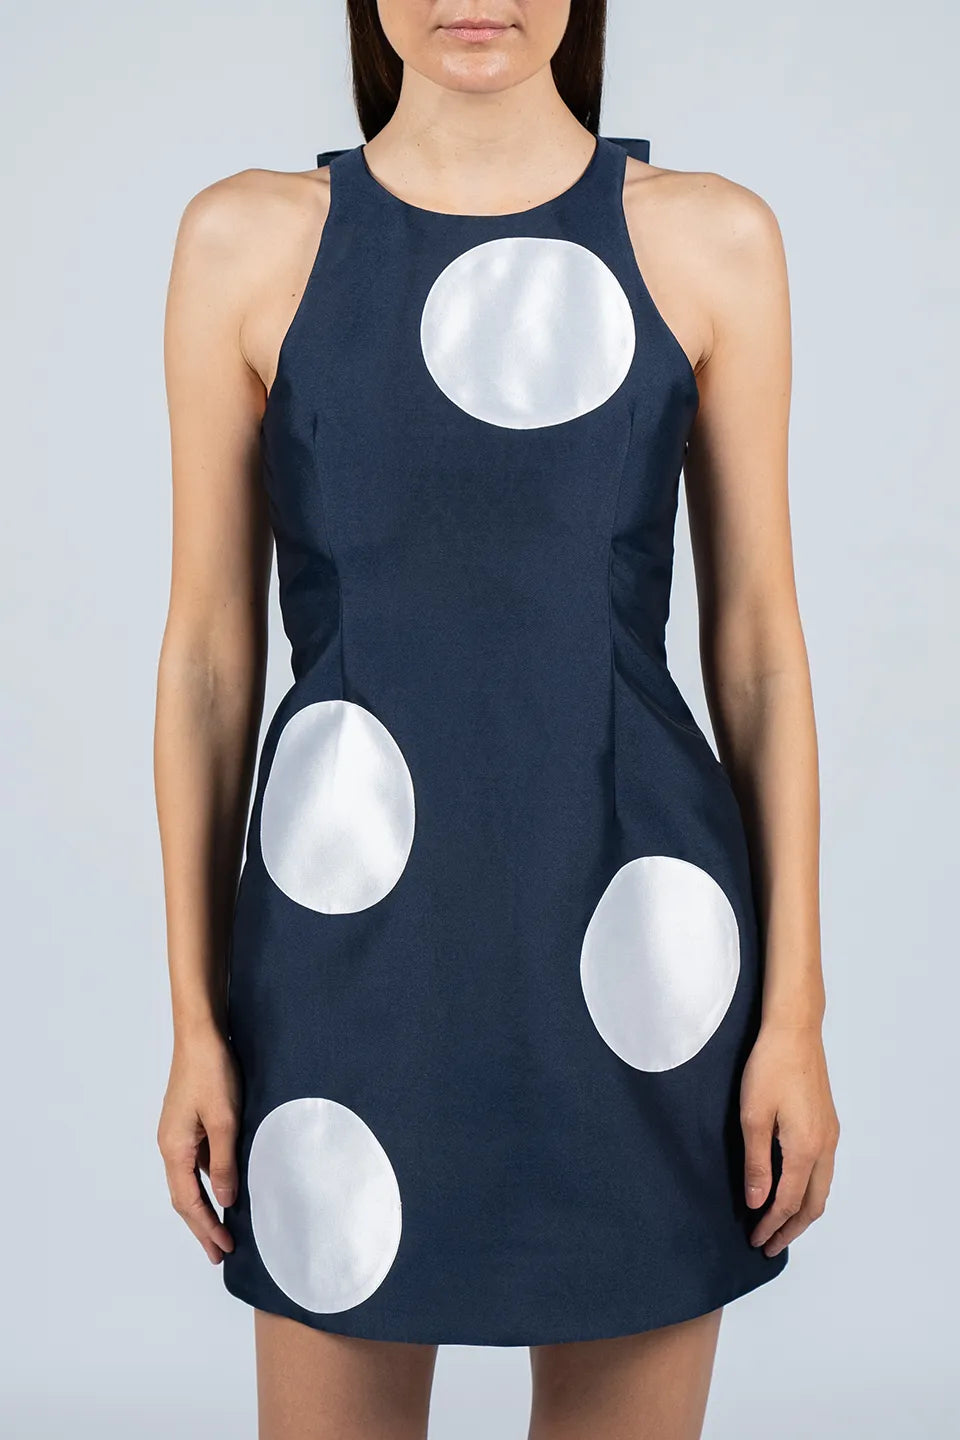 Shop online trendy Blue Mini dresses from Vivetta Fashion designer. Product gallery 1